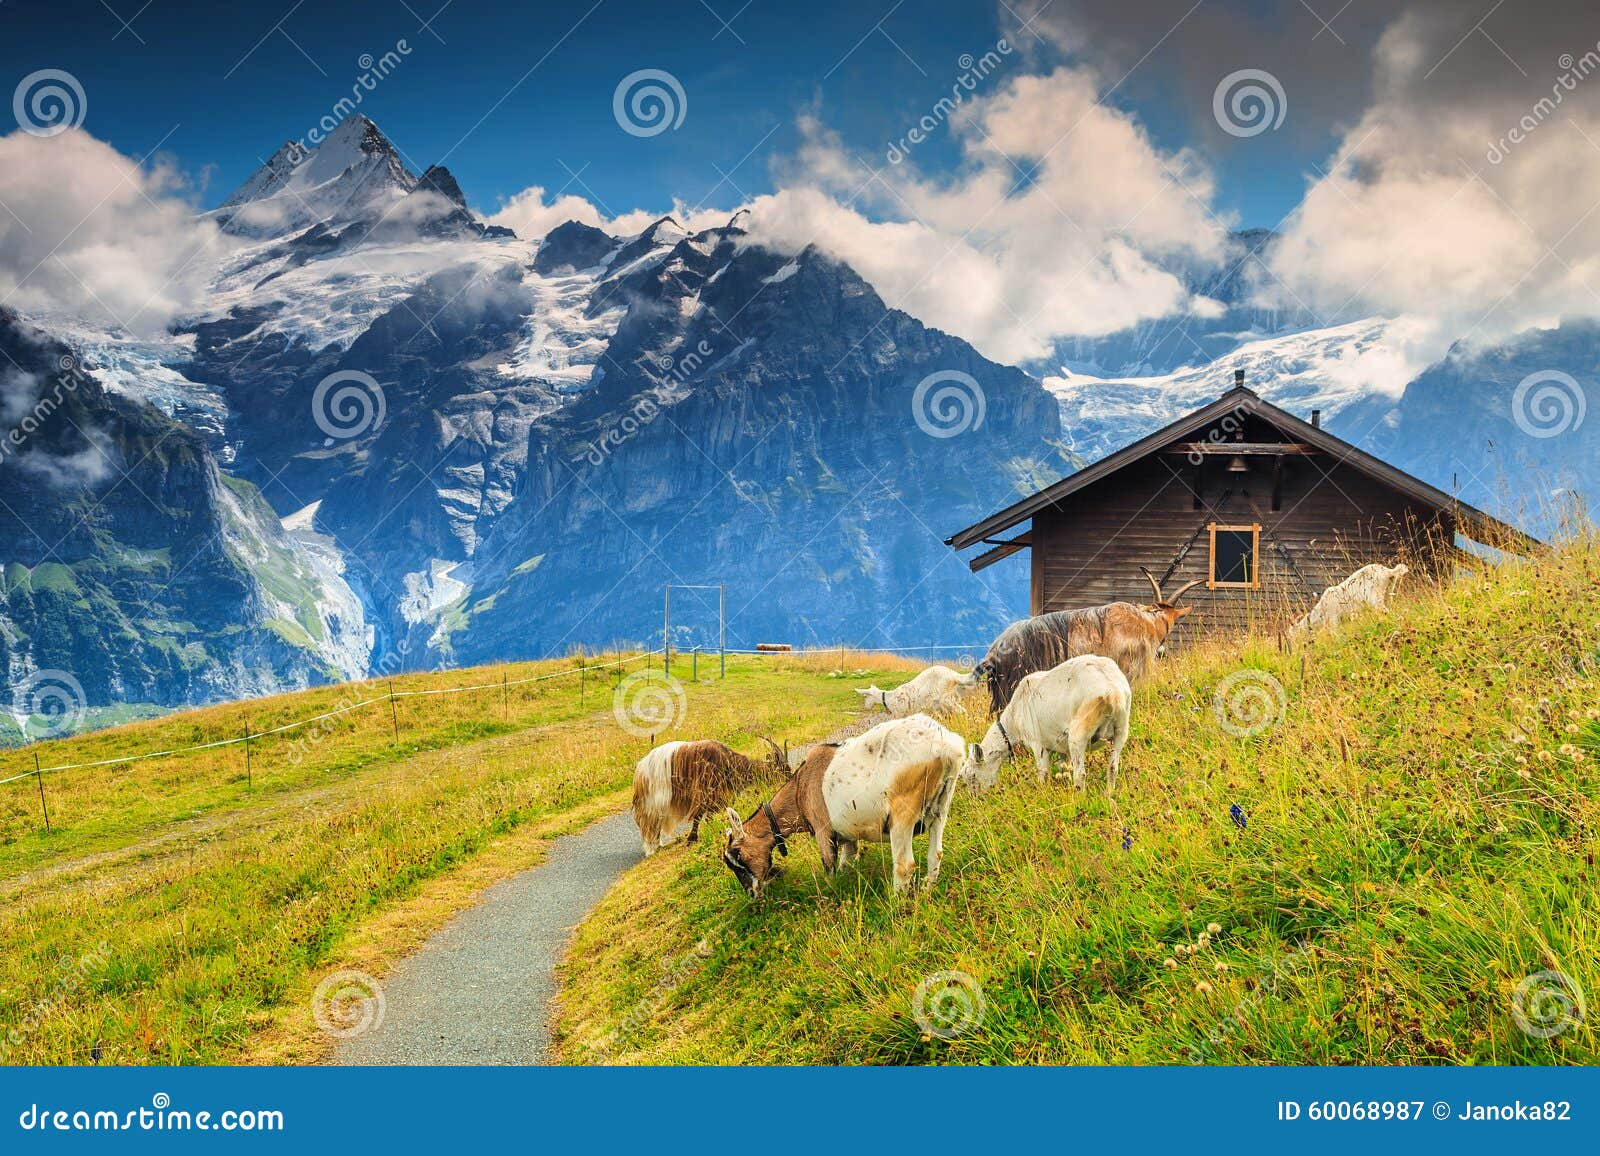 goats grazing on the alpine green field, grindelwald, switzerland, europe